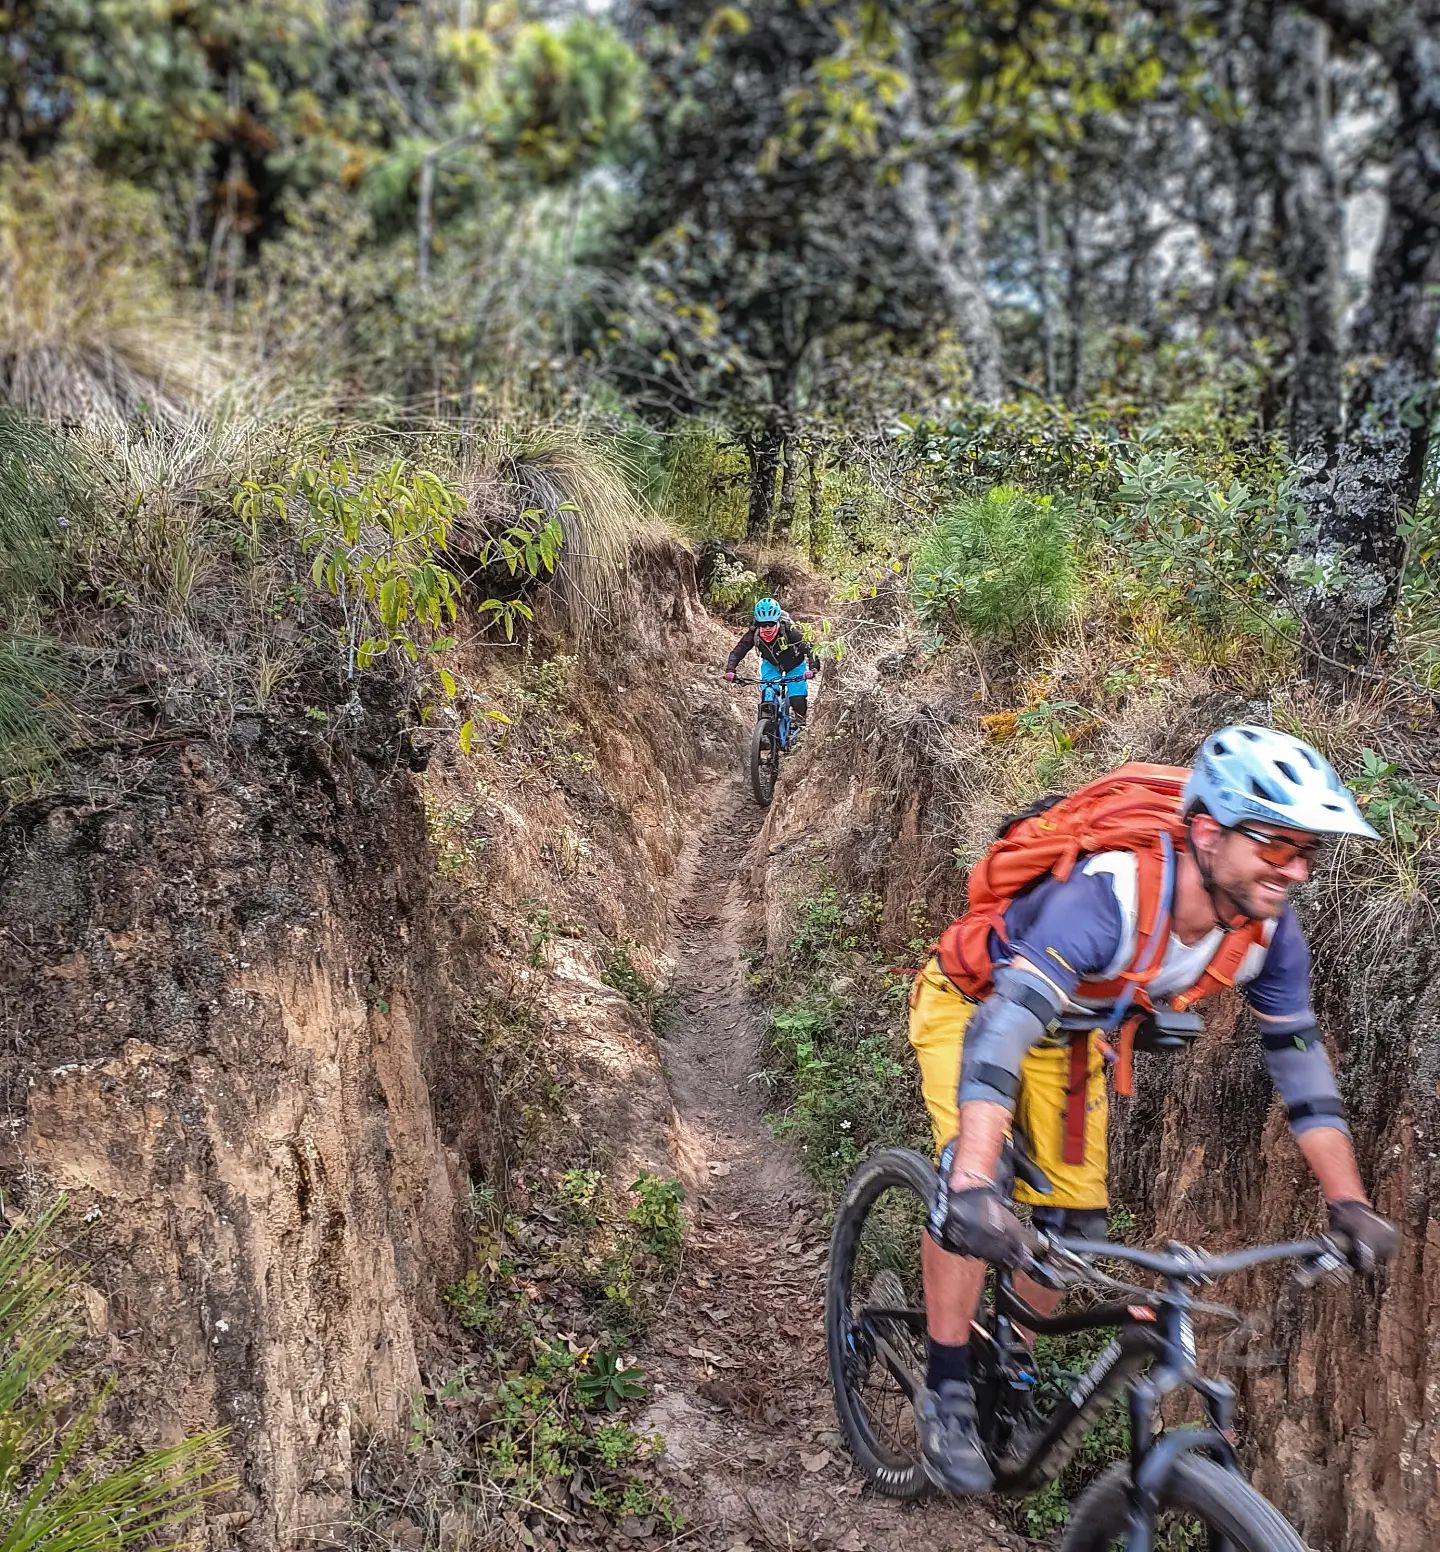 Tecpán trails 🇨🇭✌️.#mtbtravel #mtbtours #gorideyourbike #enduromtb #explore #downhillmtb #outside #freedomontwowheels #adventuretime #adventuremtb #bikelife #mtbguatemala #tecpanguatemala